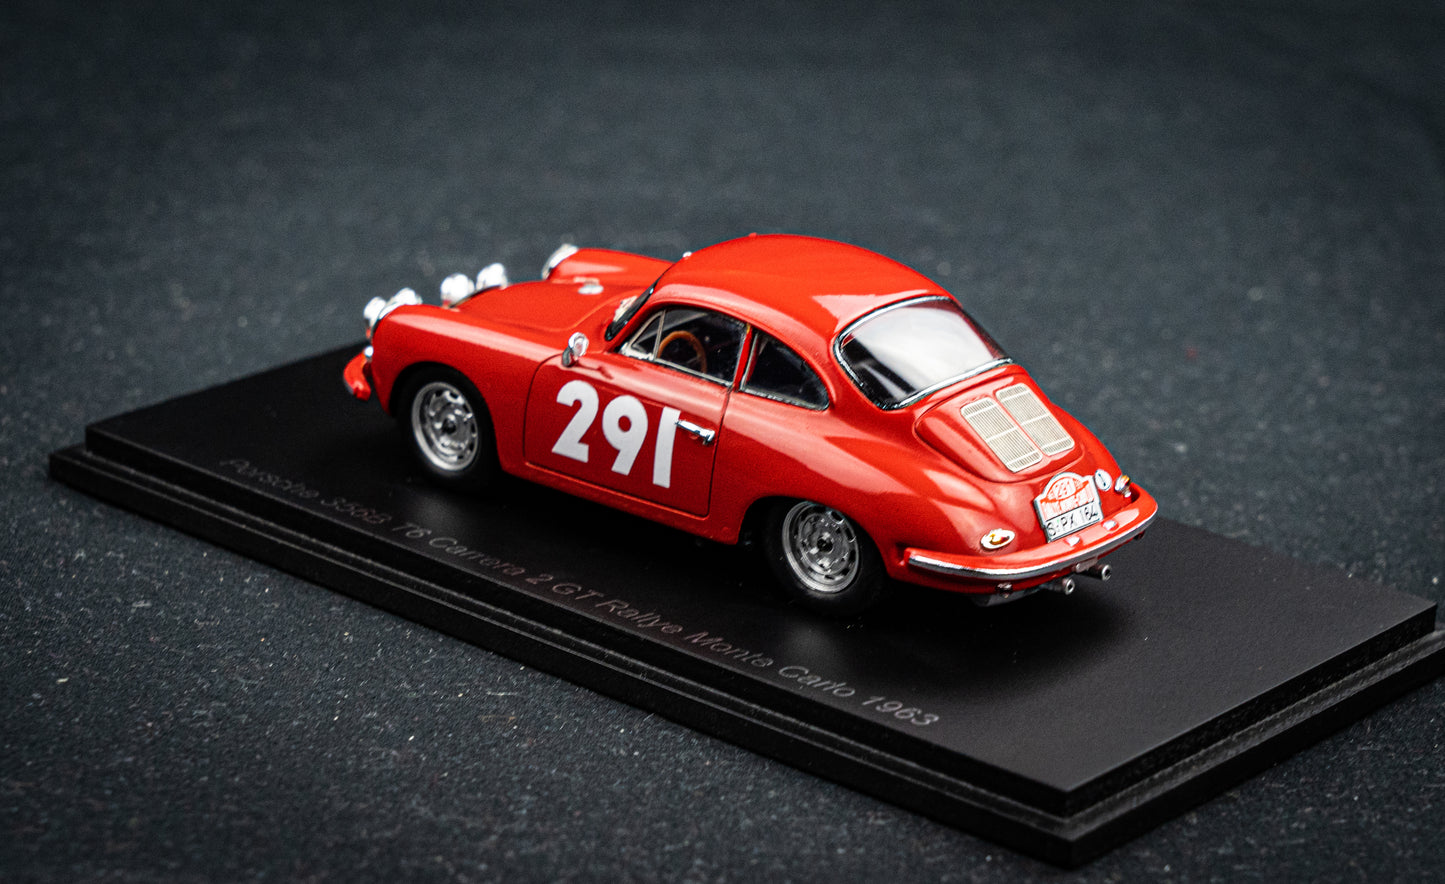 Porsche 356B T6 Carrera 2 GT #291 Walter / Stock - Rallye Monte Carlo 1963 - Spark 1:43